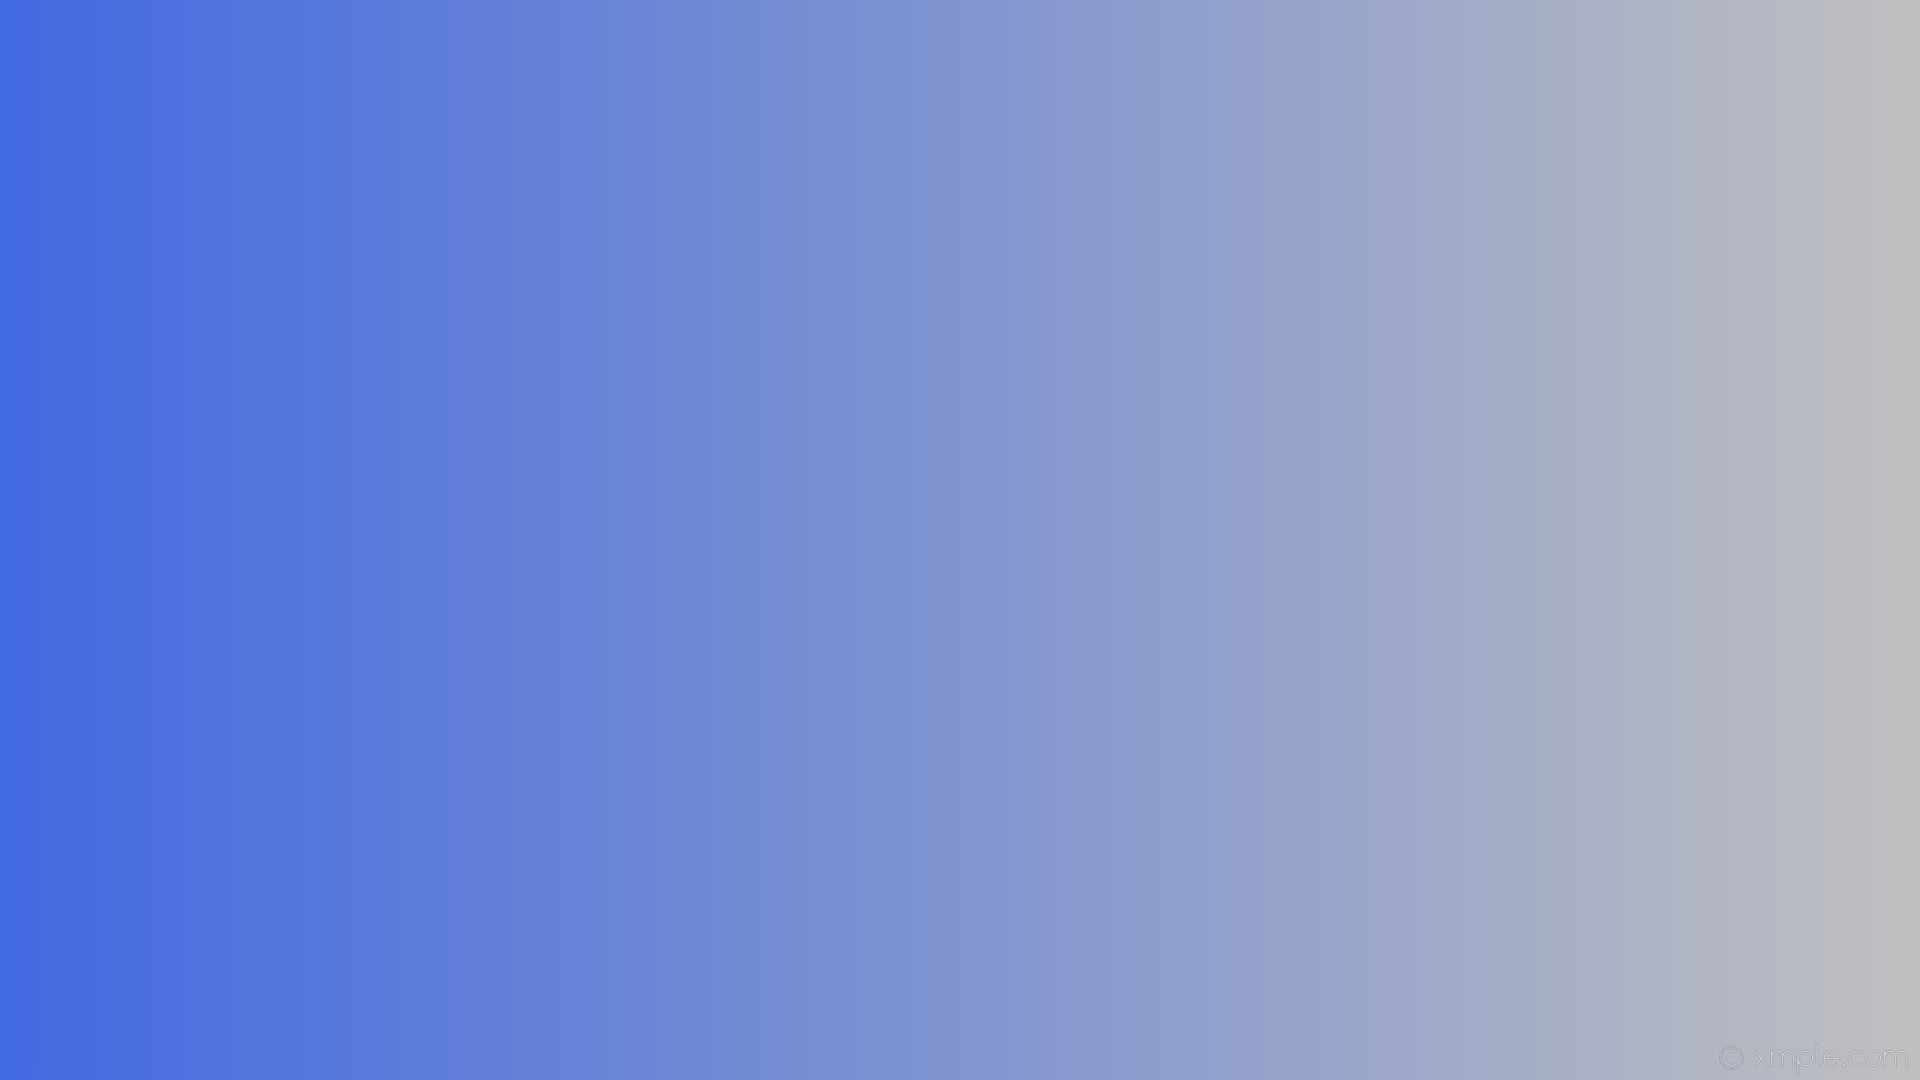 1920x1080 wallpaper linear gradient grey blue royal blue silver #4169e1 #c0c0c0 180Â°